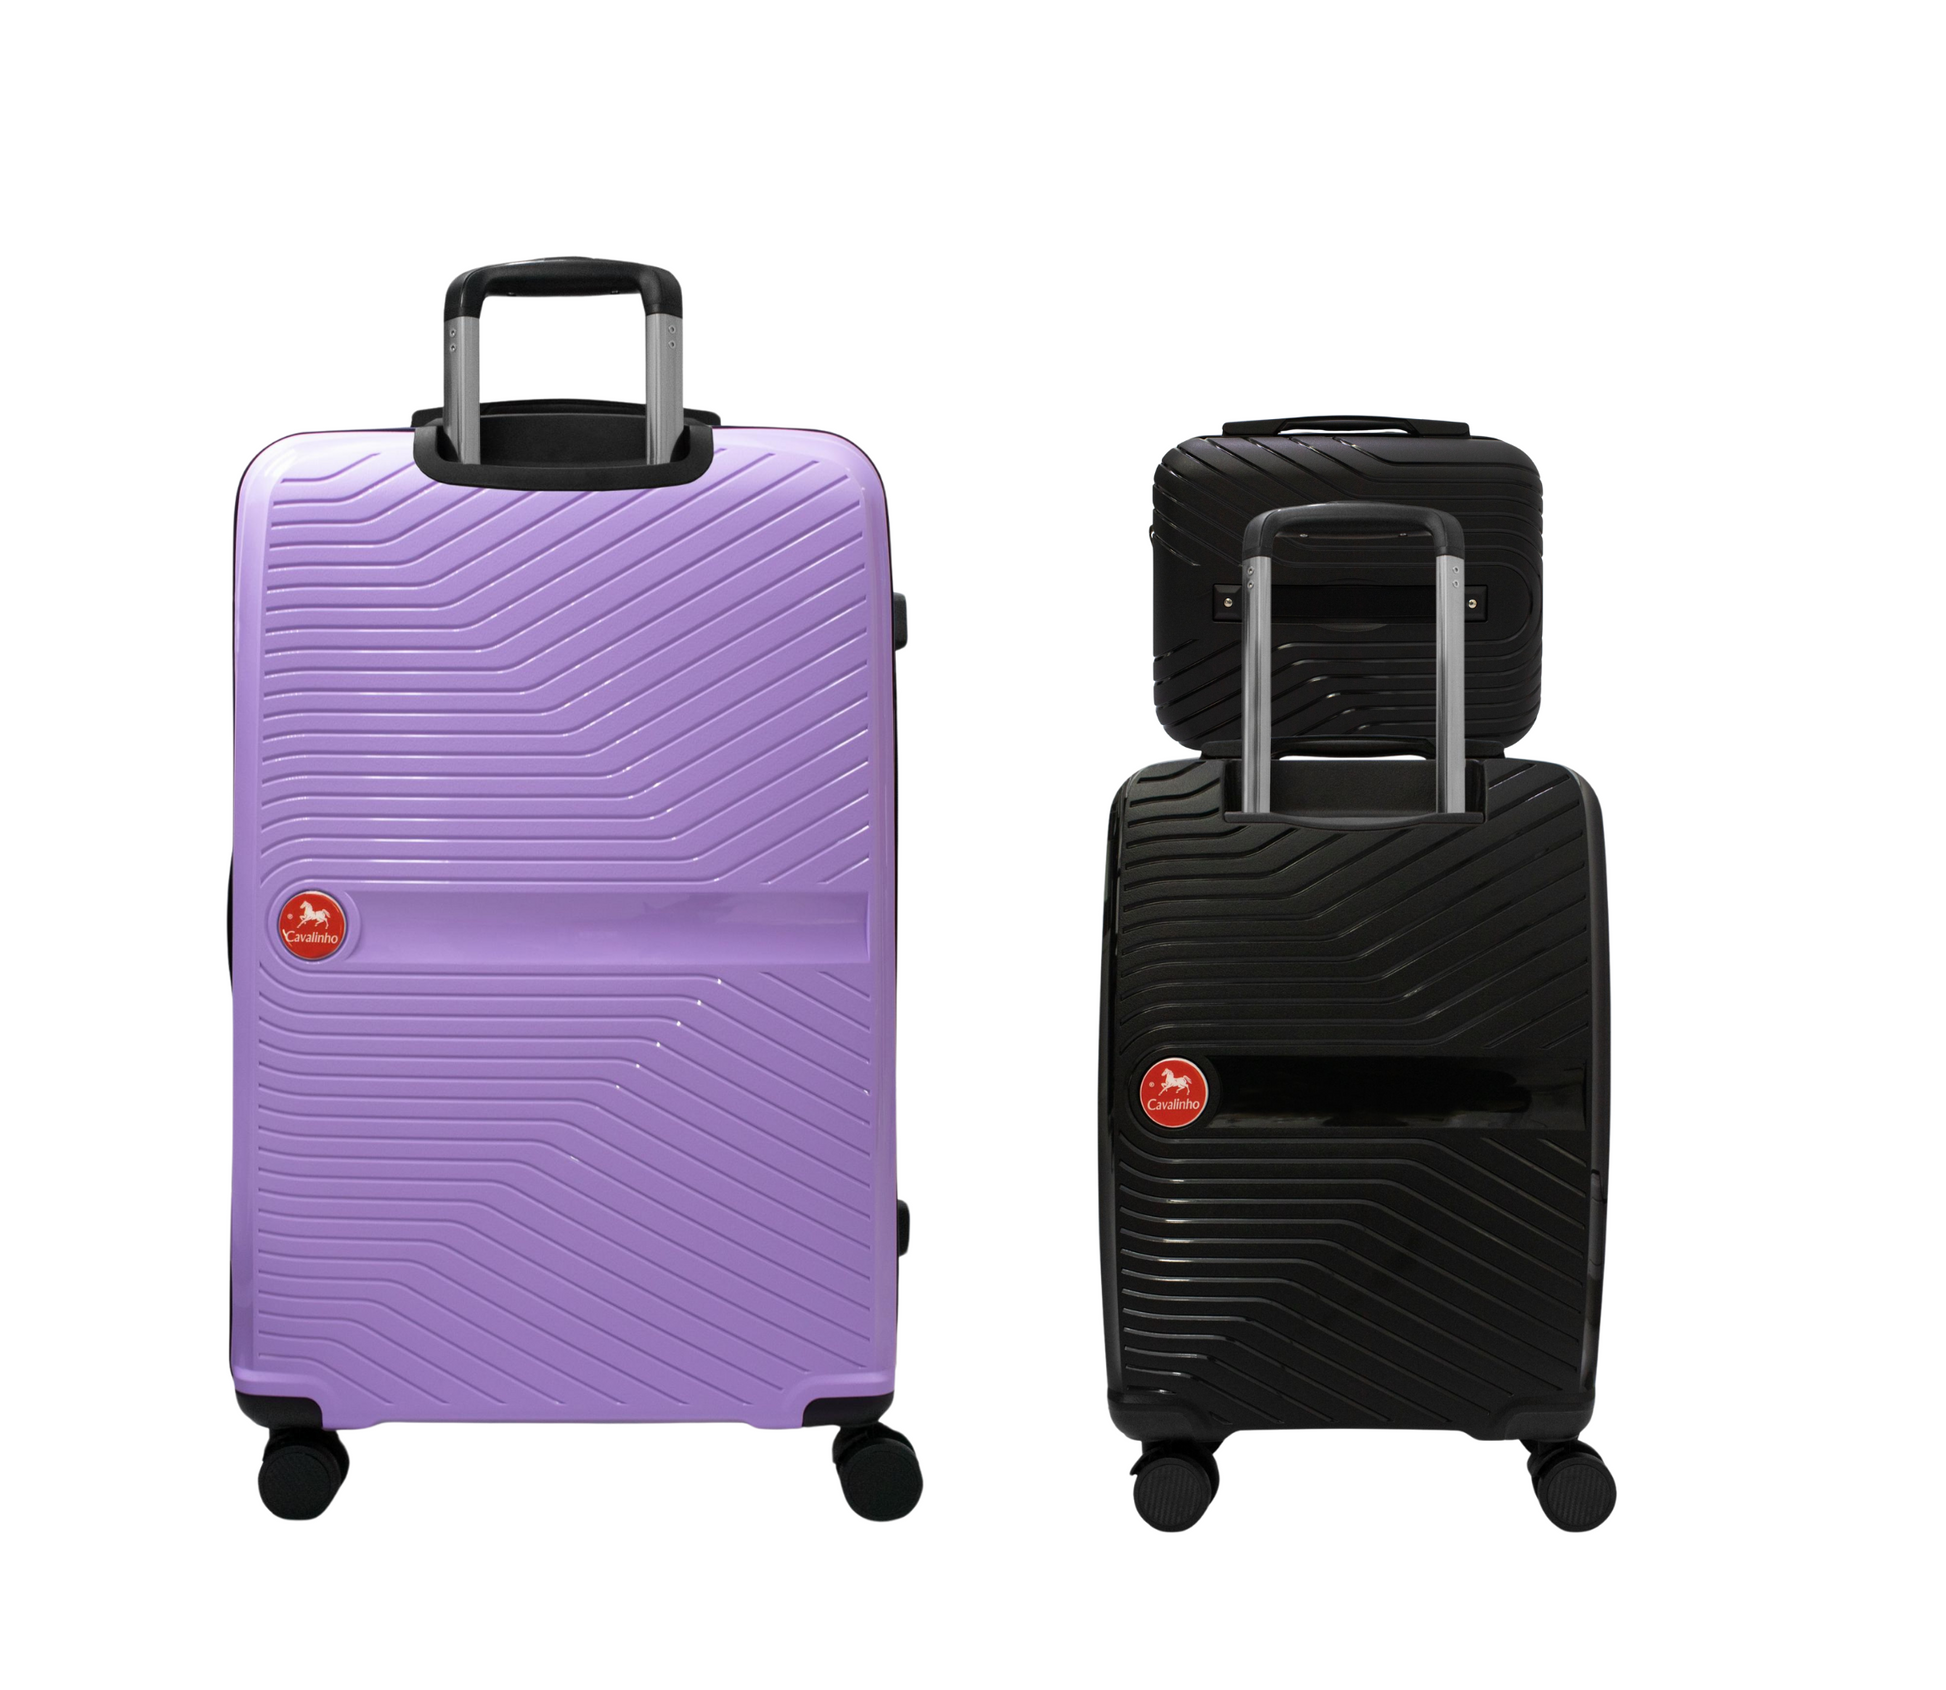 Cavalinho Colorful 3 Piece Luggage Set (15", 19" & 28") - Black Black Lilac - 68020004.010139.S151928._3